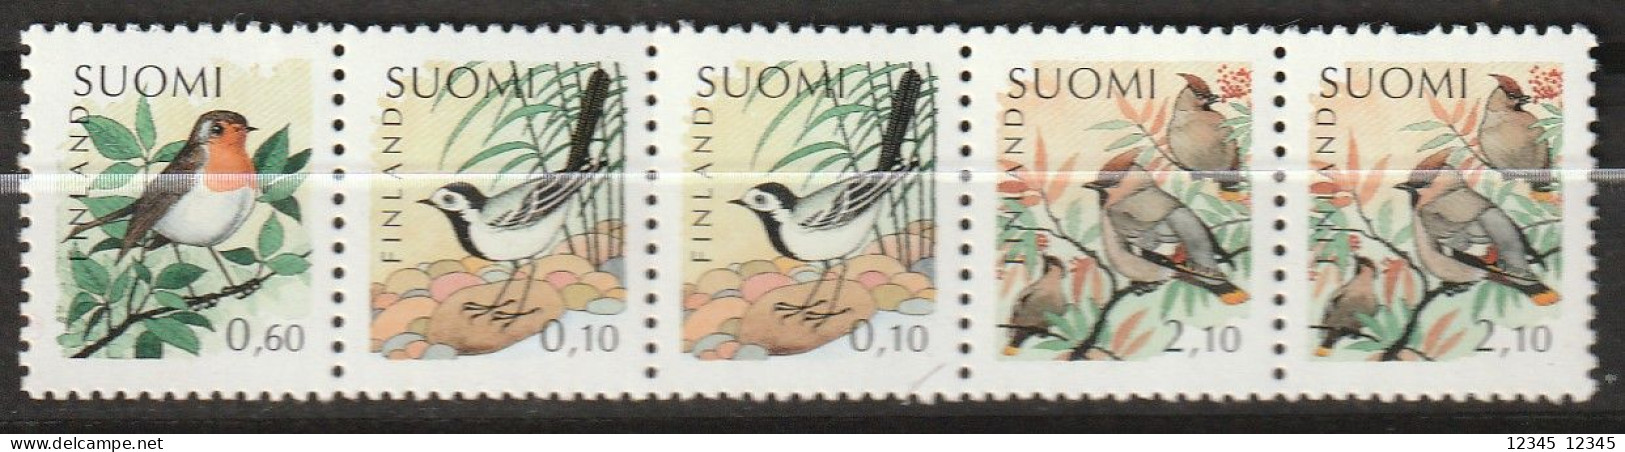 Finland 1992, Postfris MNH, Birds - Libretti